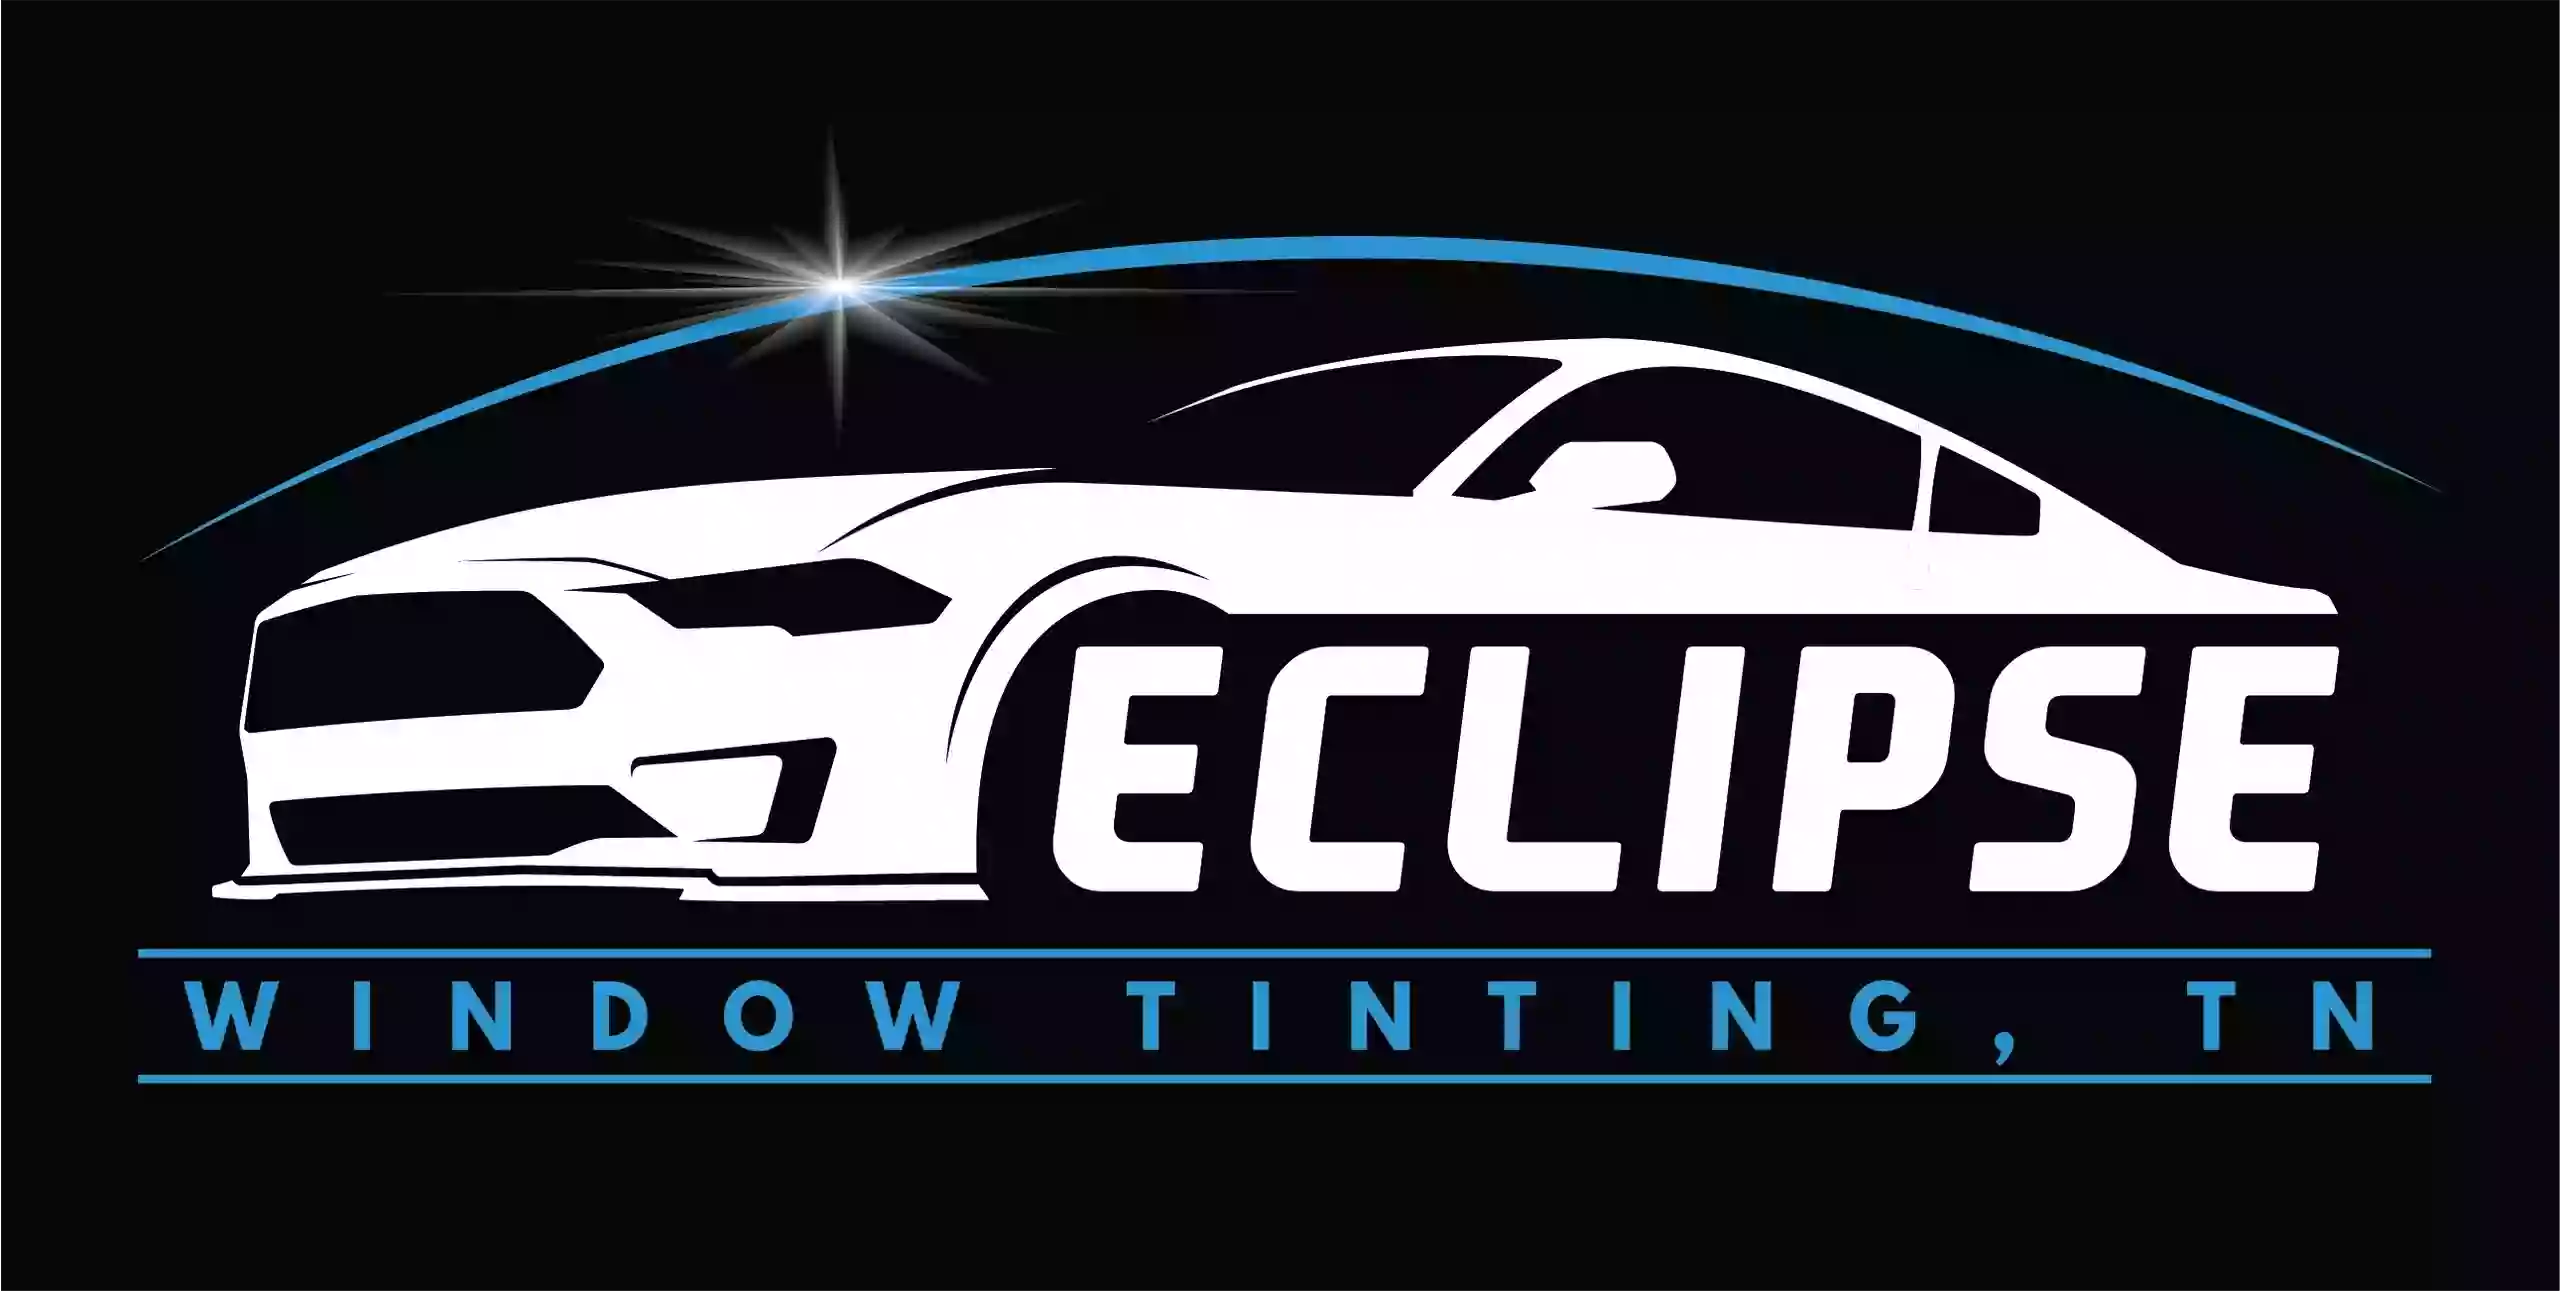 Eclipse Window Tinting TN